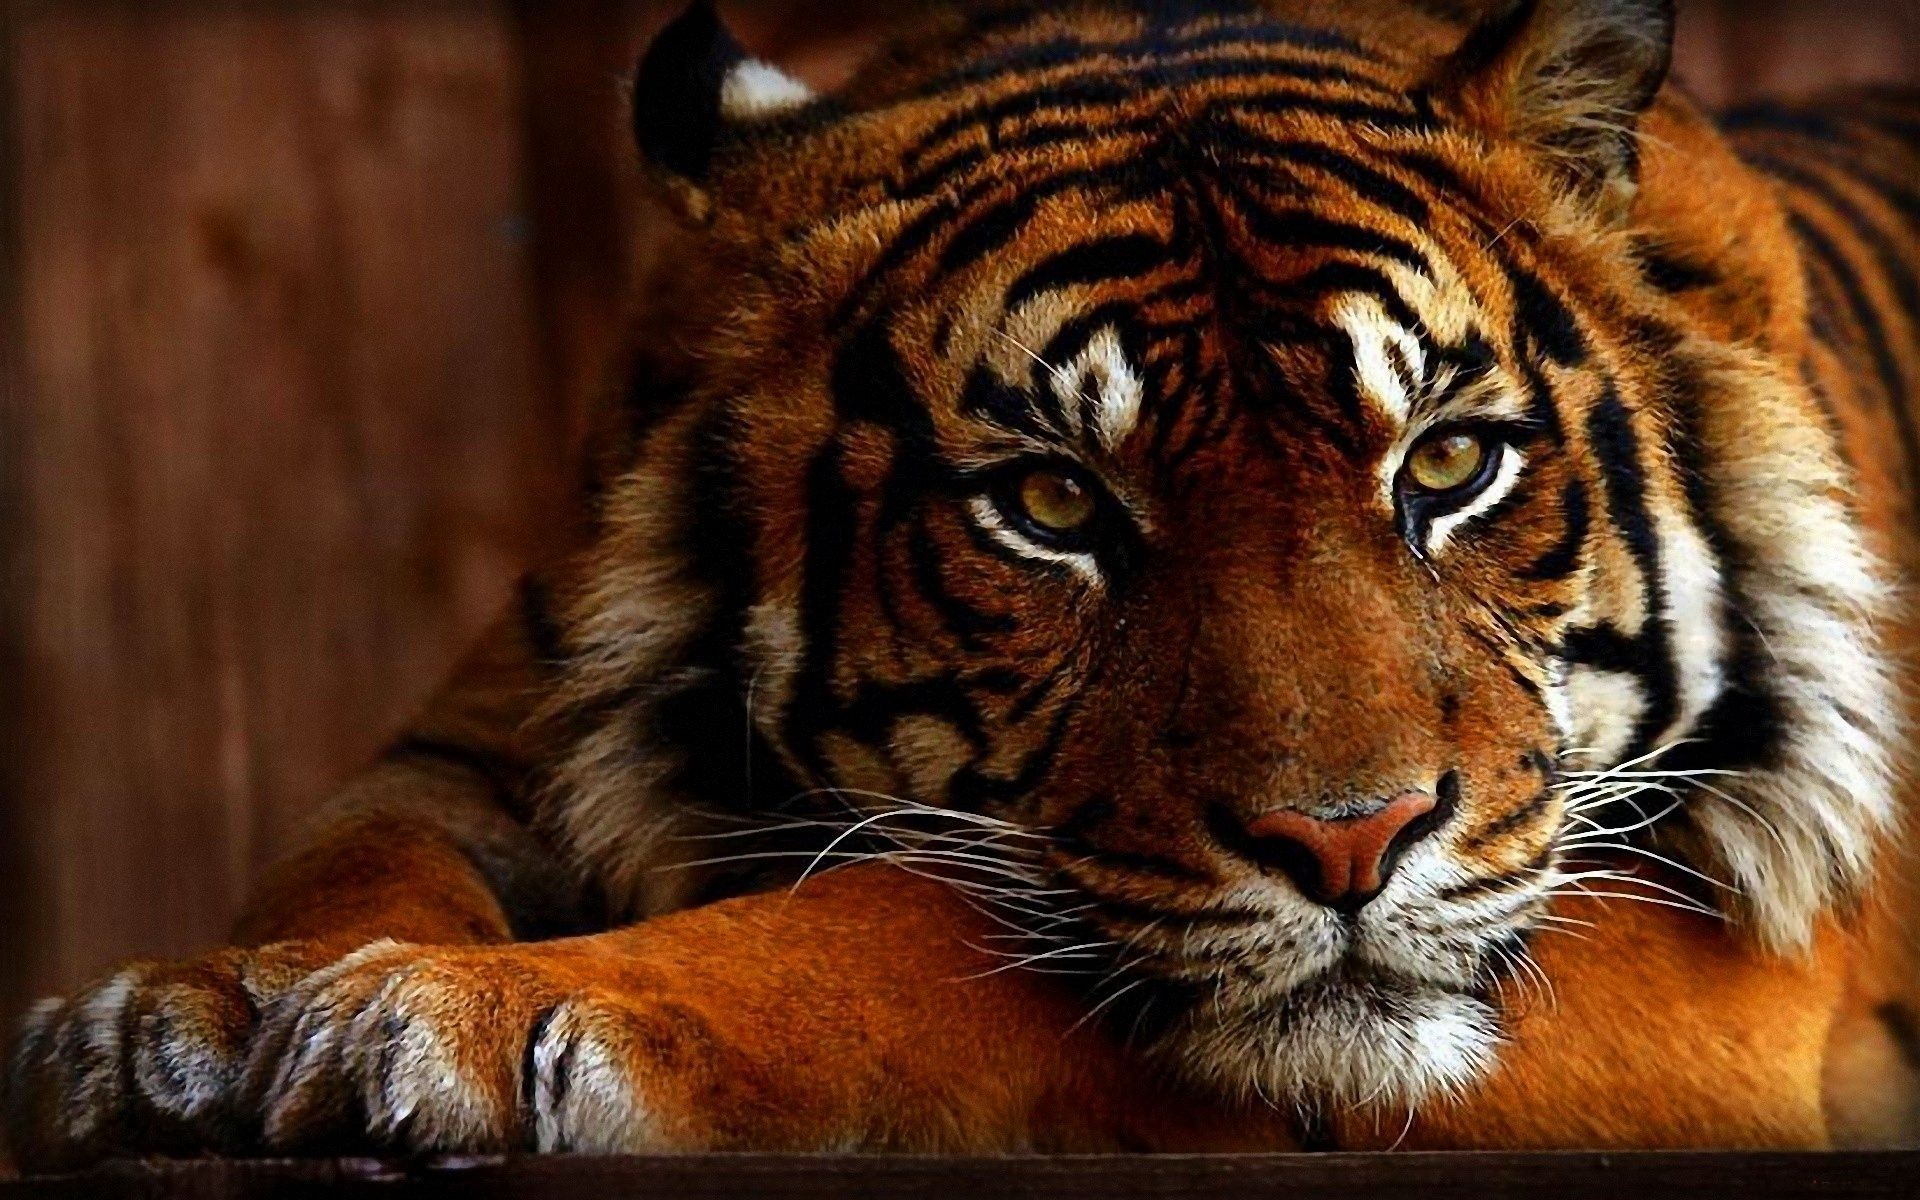 Tiger wallpapers | WallpaperUP